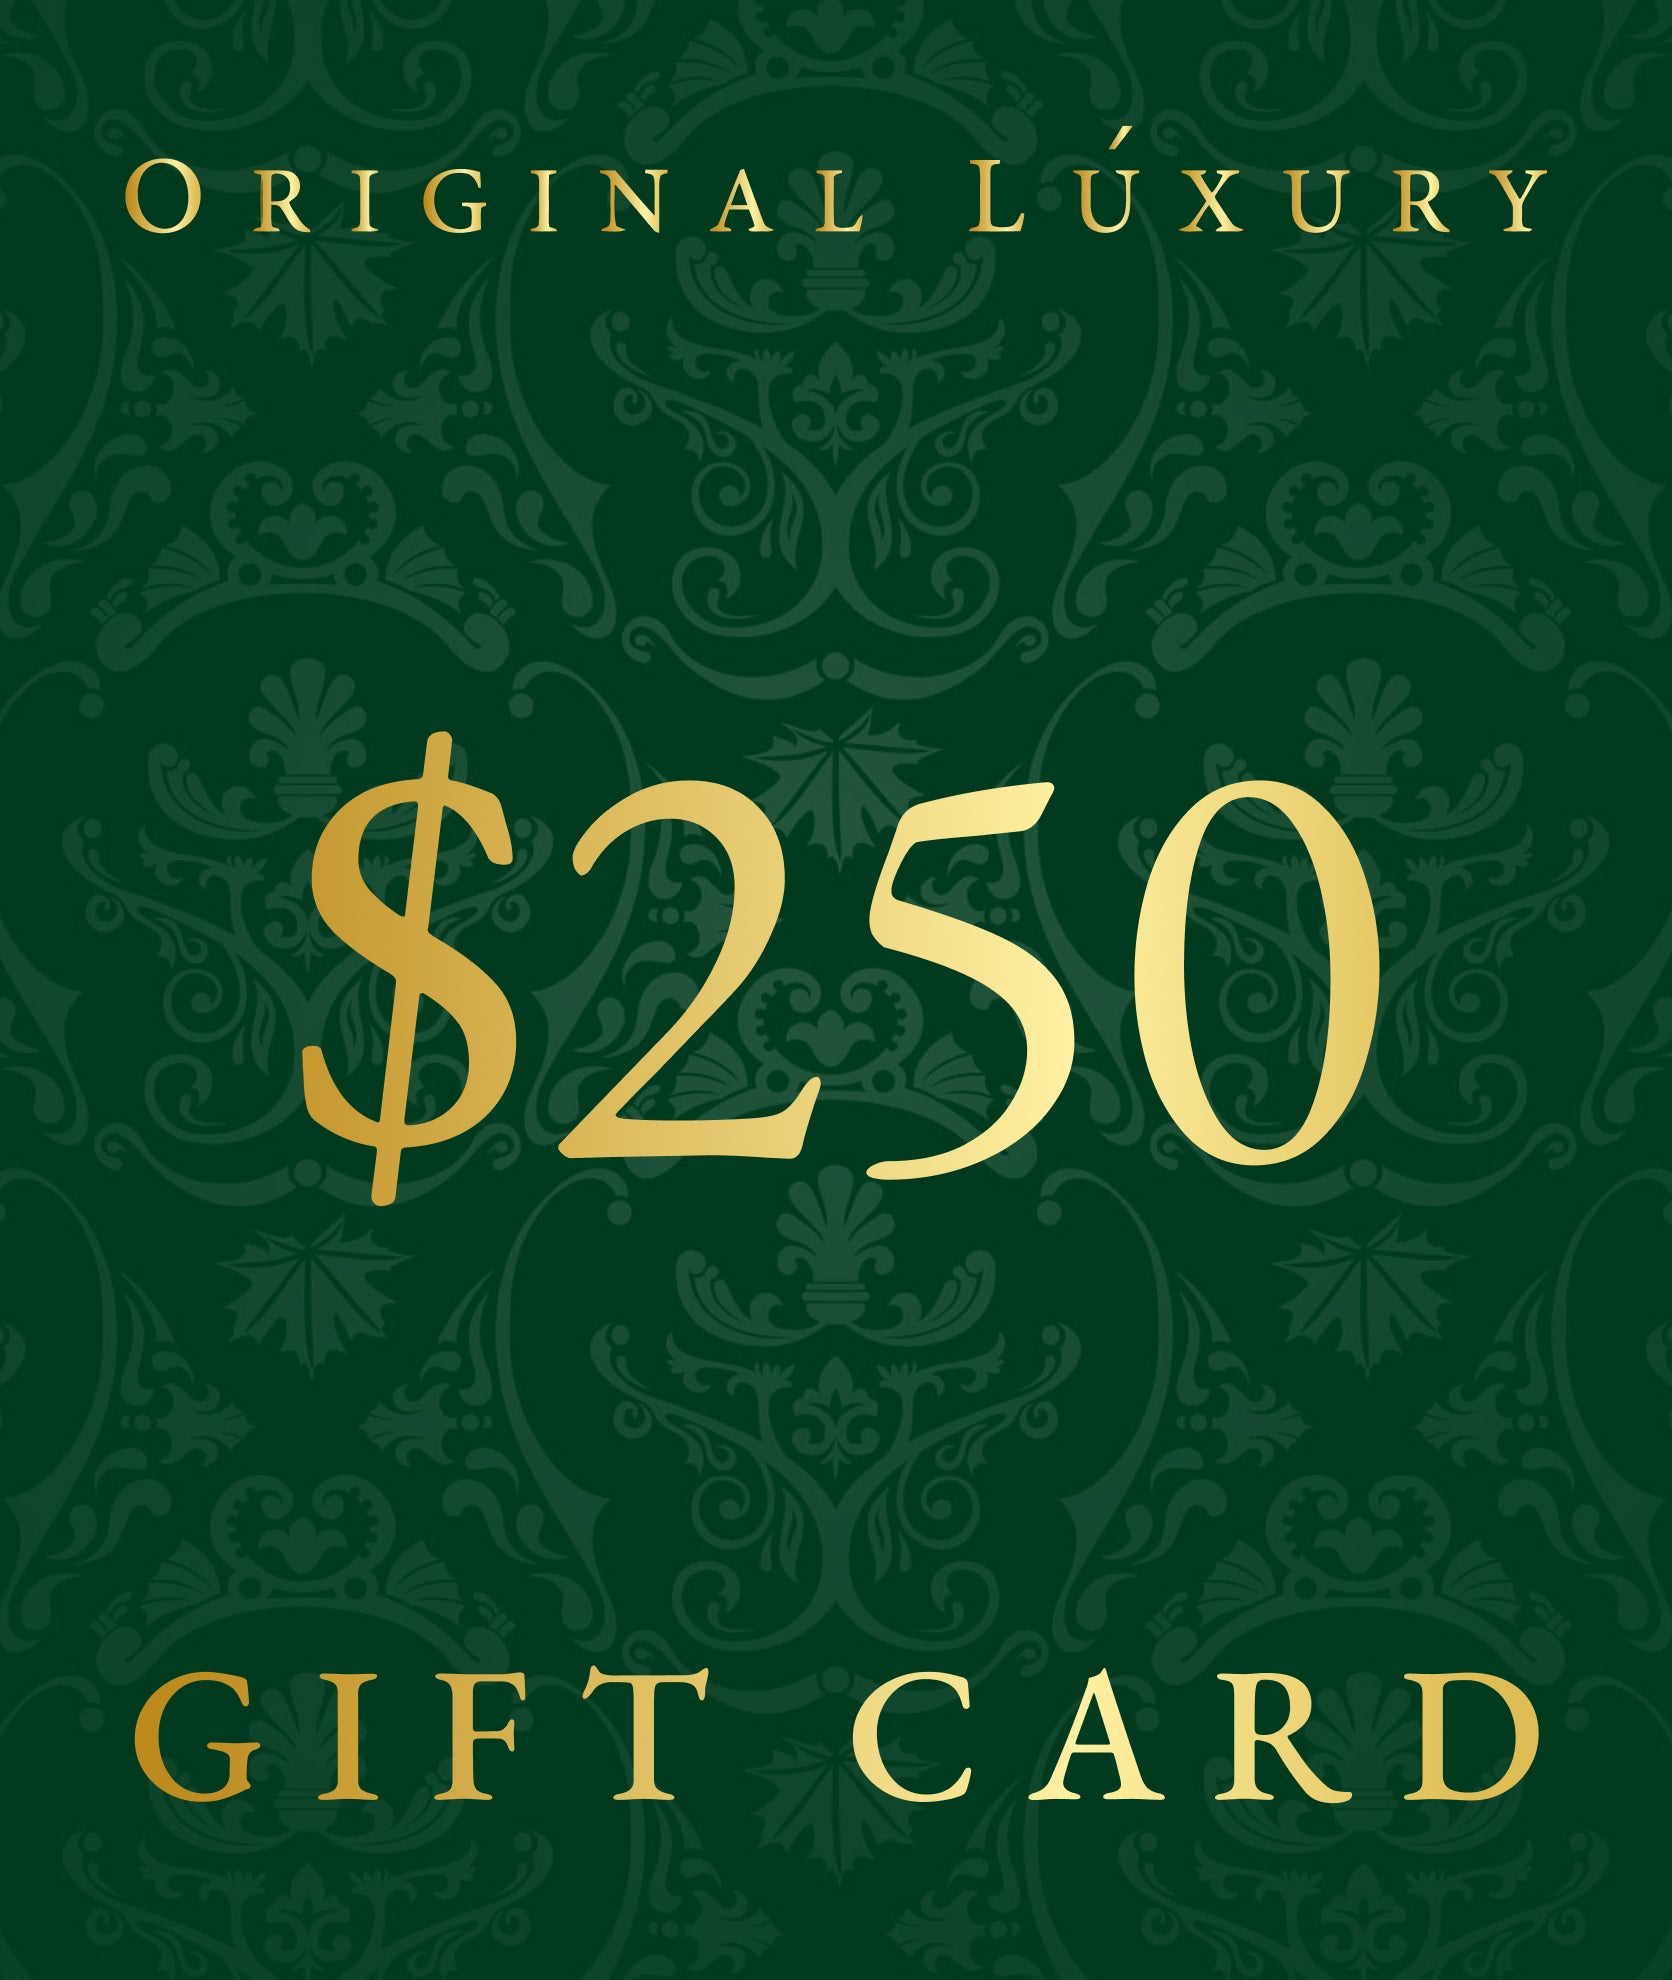 OriginalLuxury Gift Card | $250